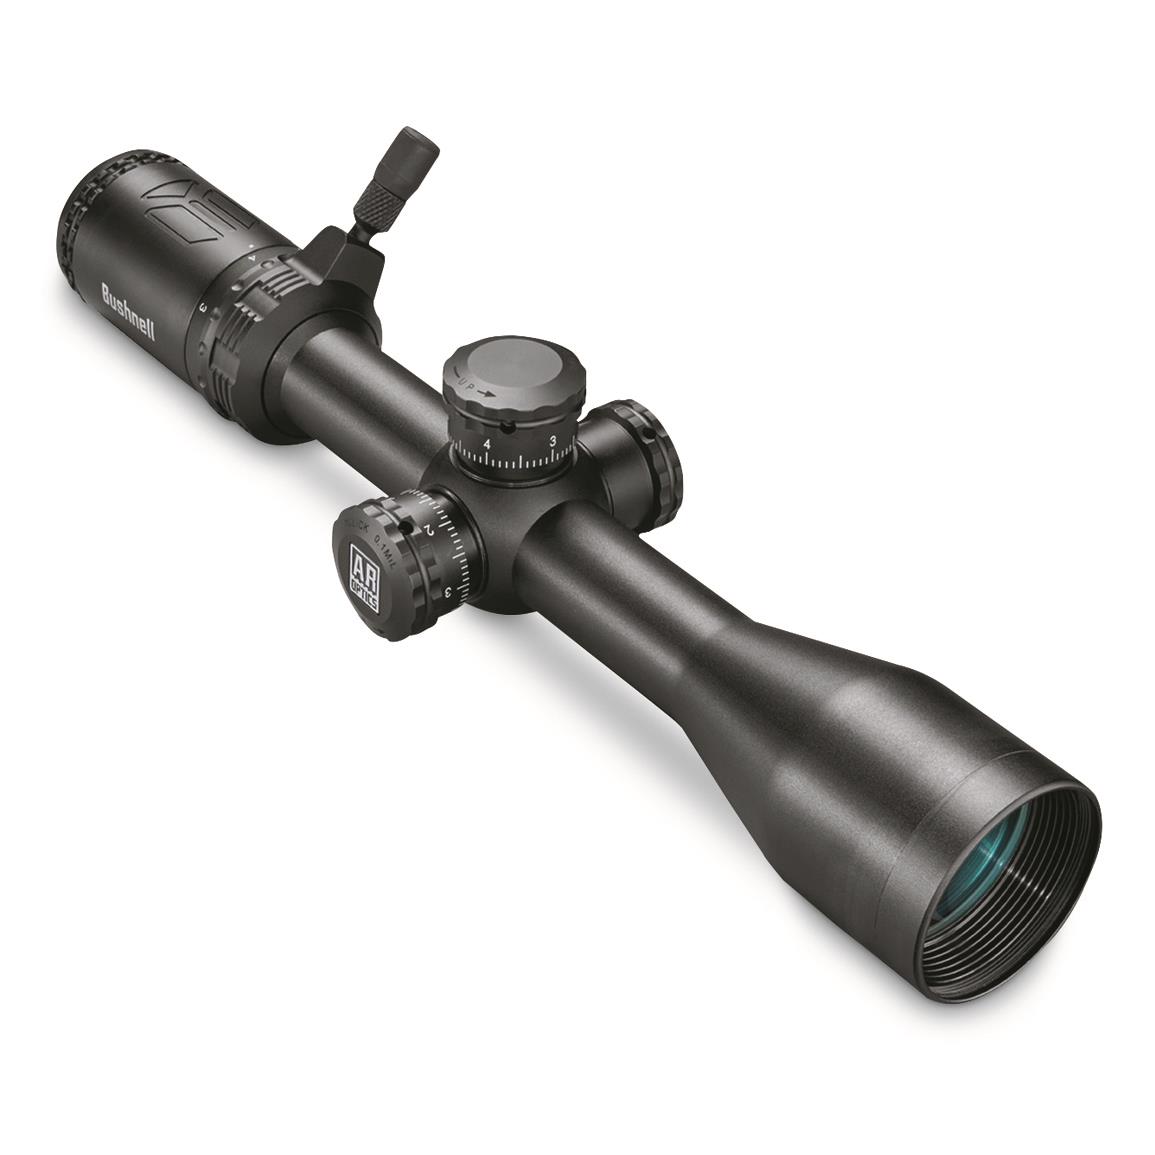 Bushnell AR Optics 3-9x40mm Rifle Scope, 1" Tube, Drop Zone-223 (SFP) Reticle